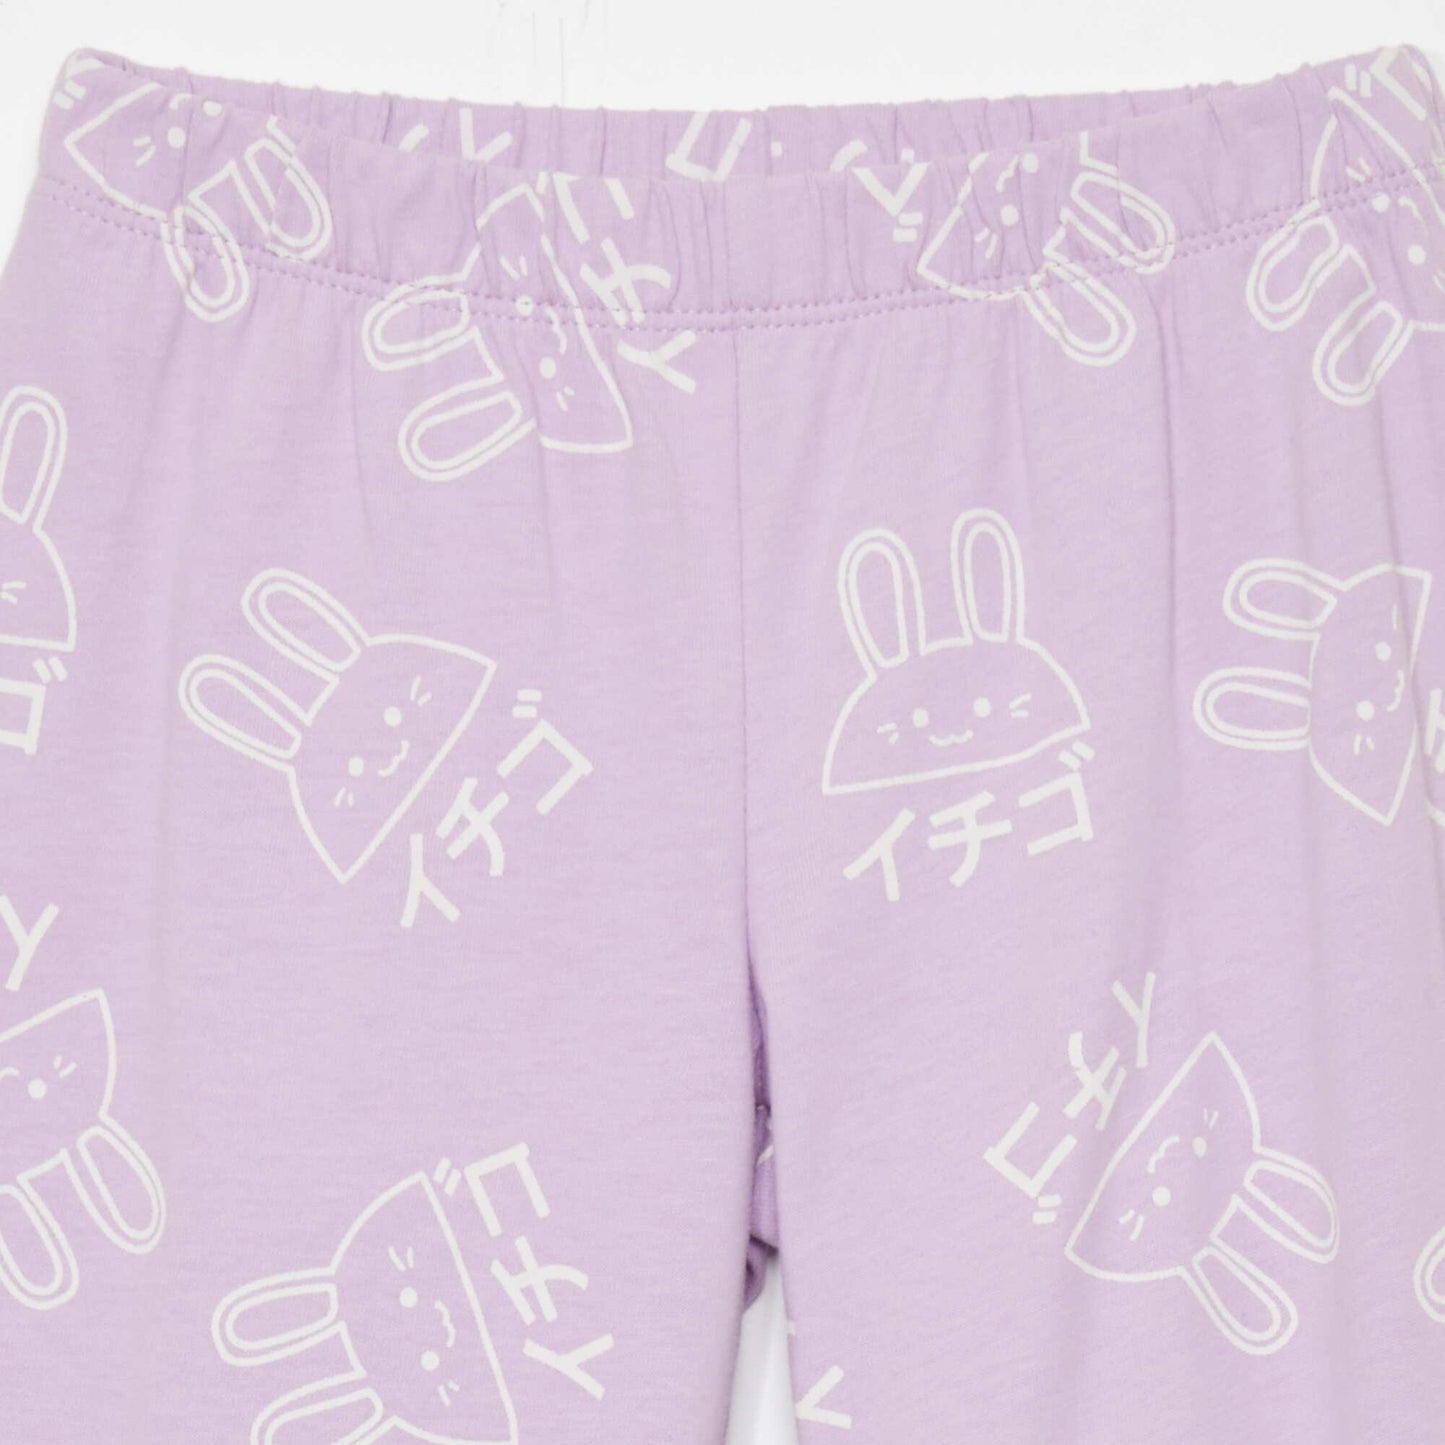 Pyjama long en jersey - 2 pièces Violet